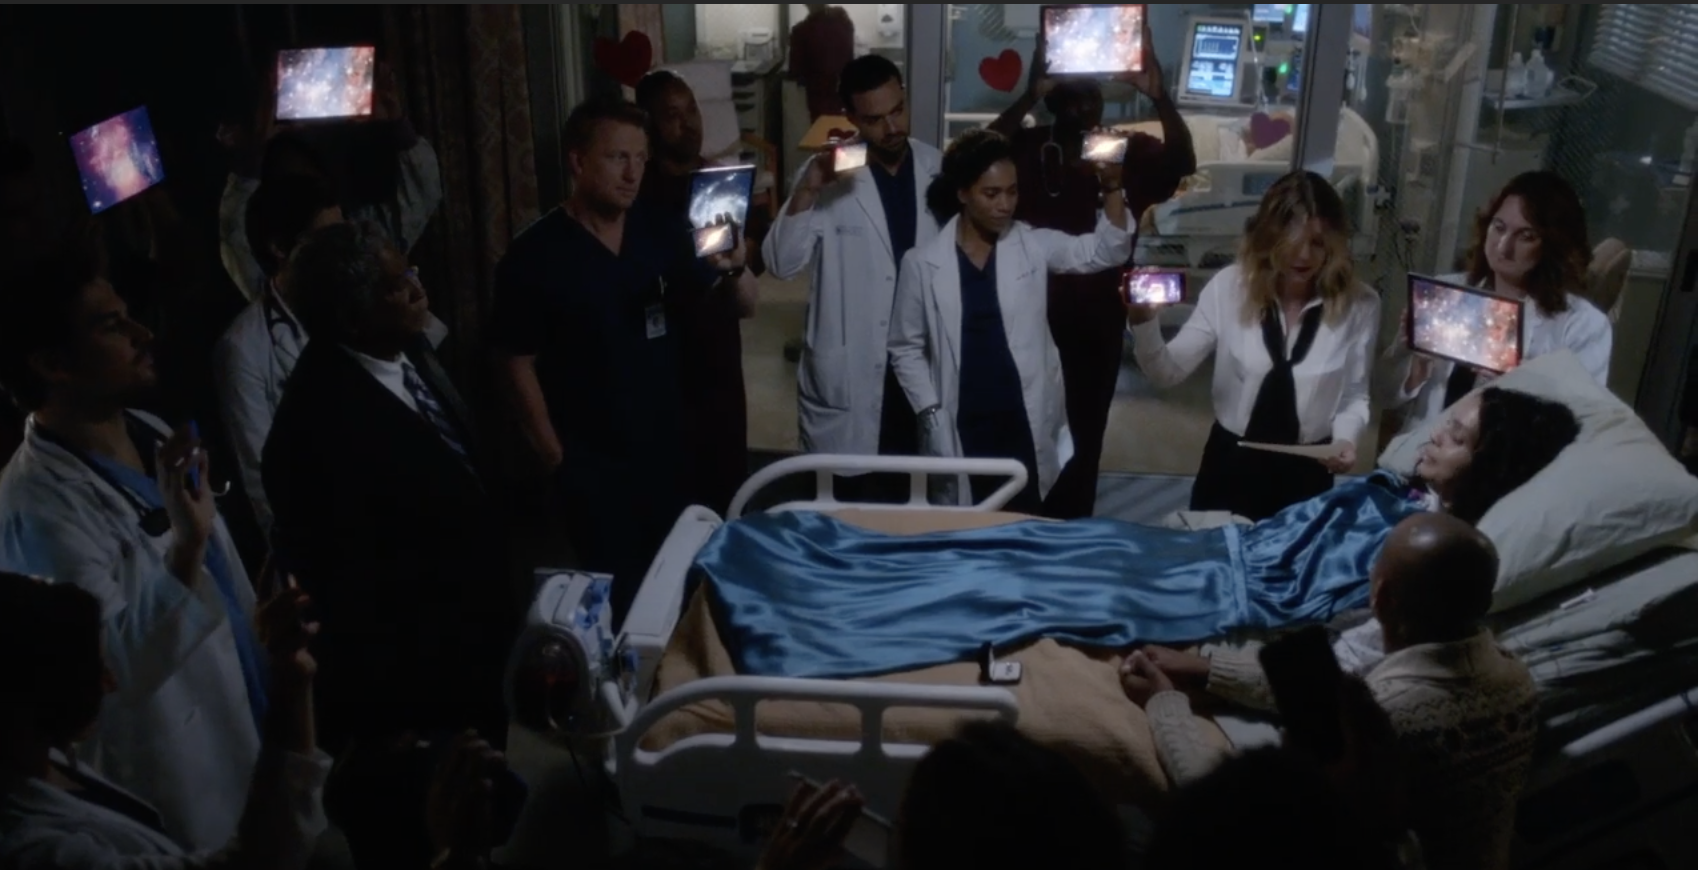 the doctors hold up ipads and phones with stars above Natasha and Garrett